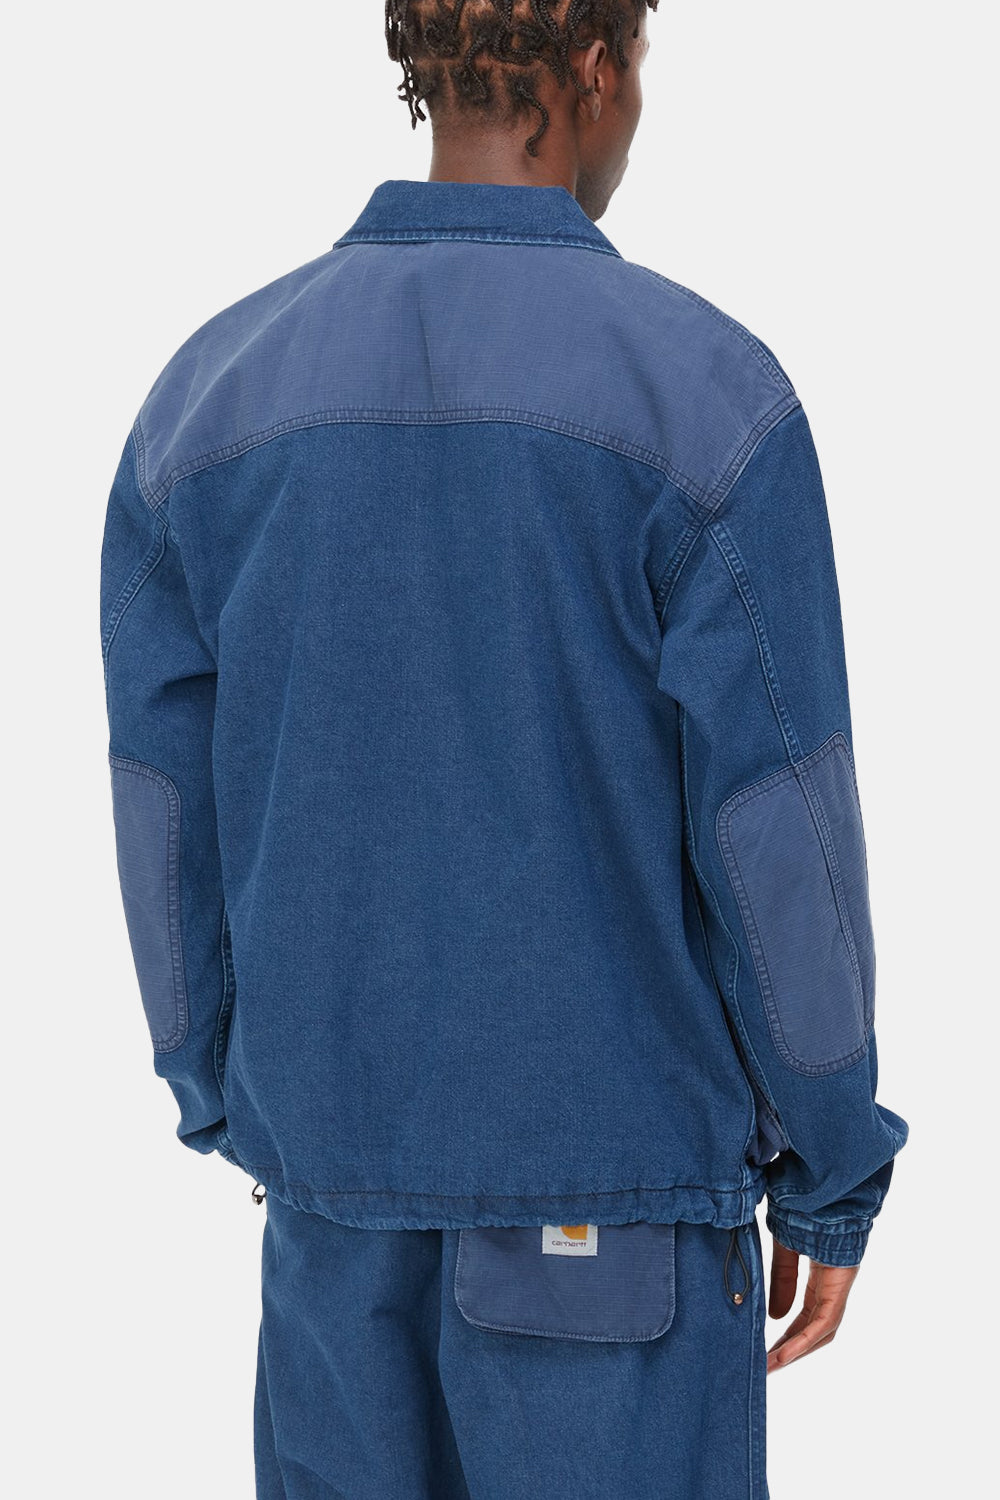 Carhartt WIP Alma Jacket (Blue Stone Washed)